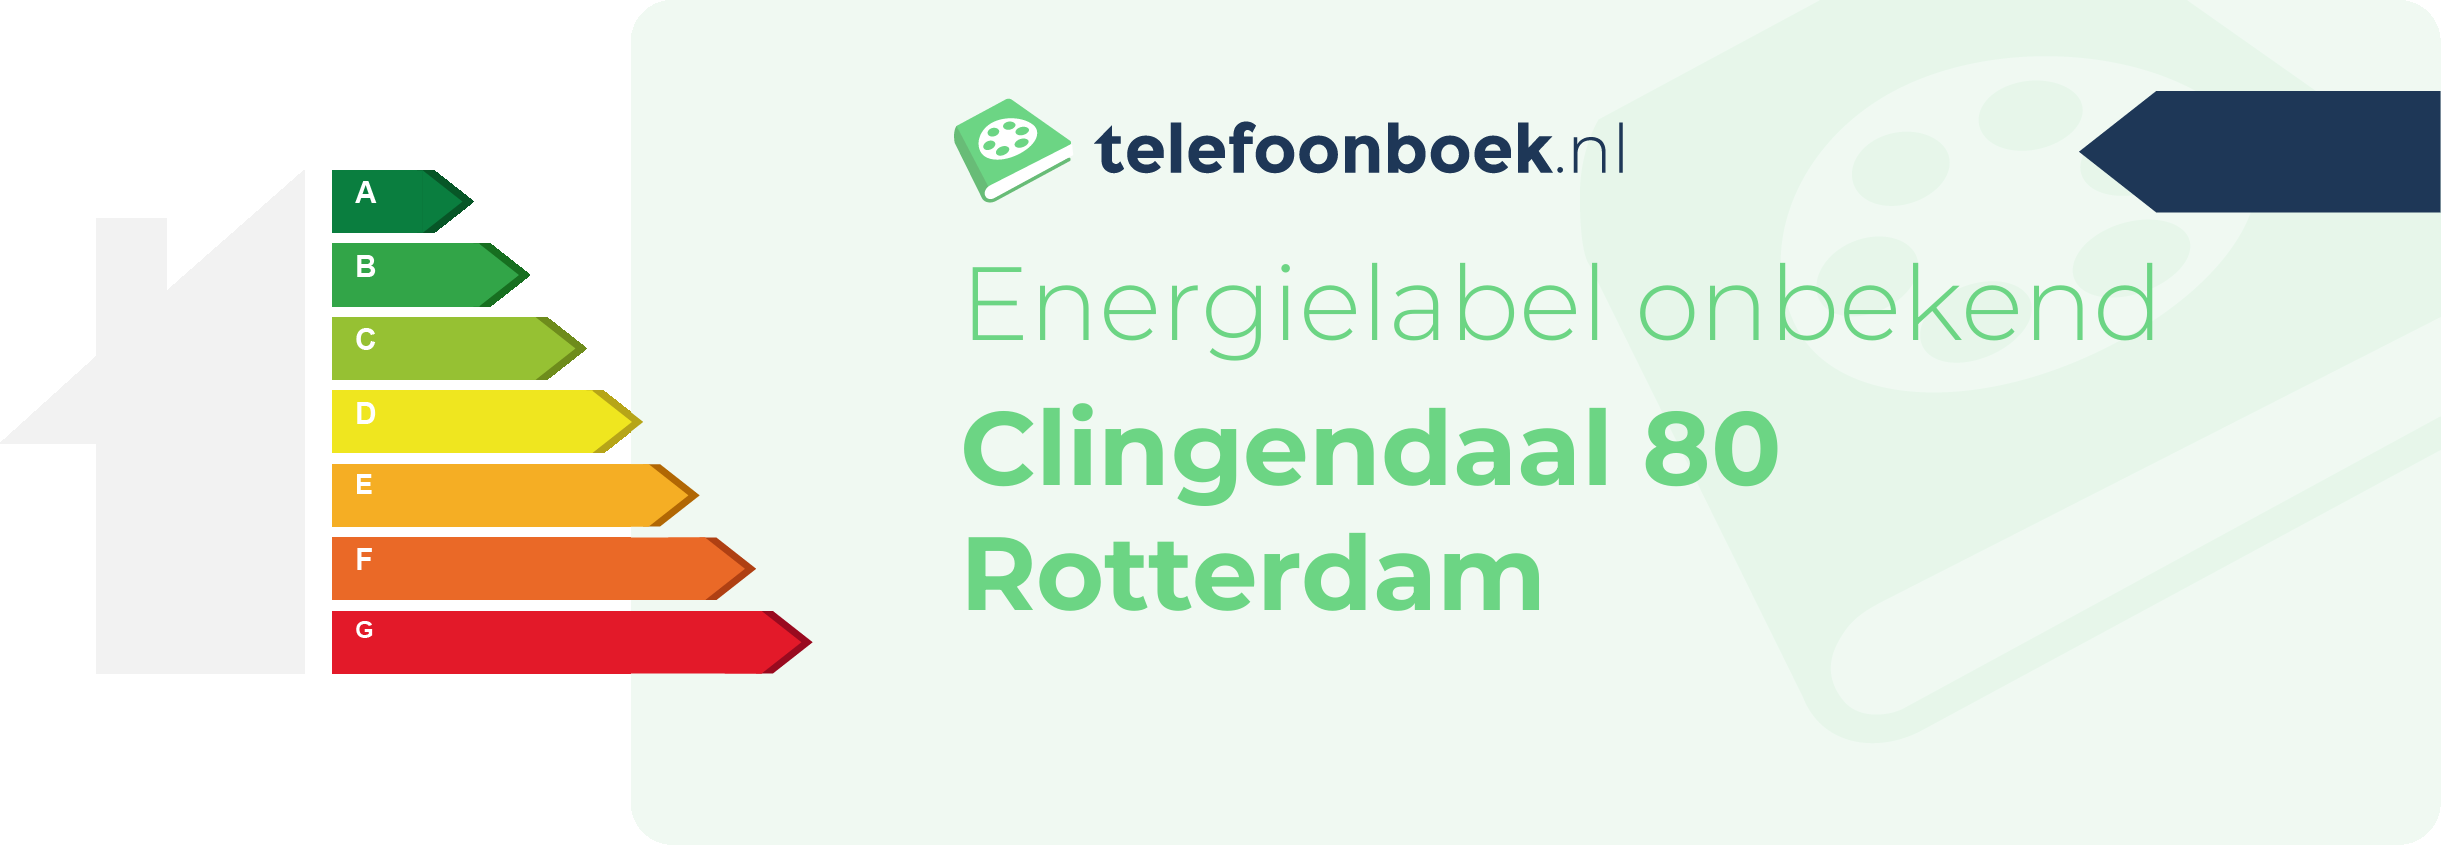 Energielabel Clingendaal 80 Rotterdam